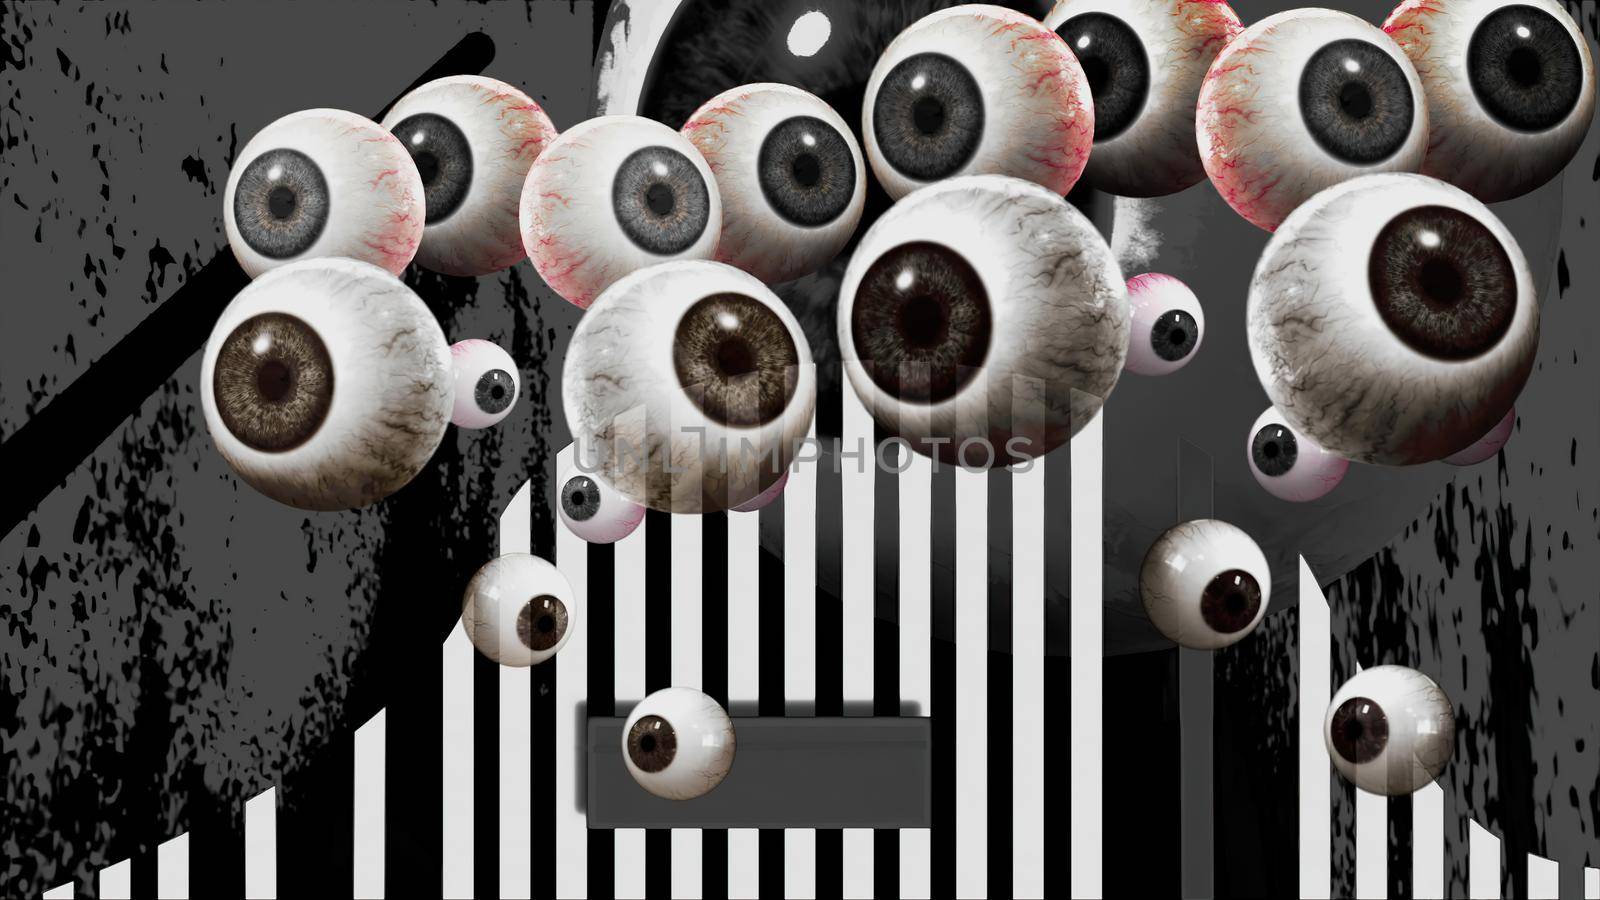 3d illustration - Eyes Ball on abstract backround by vitanovski